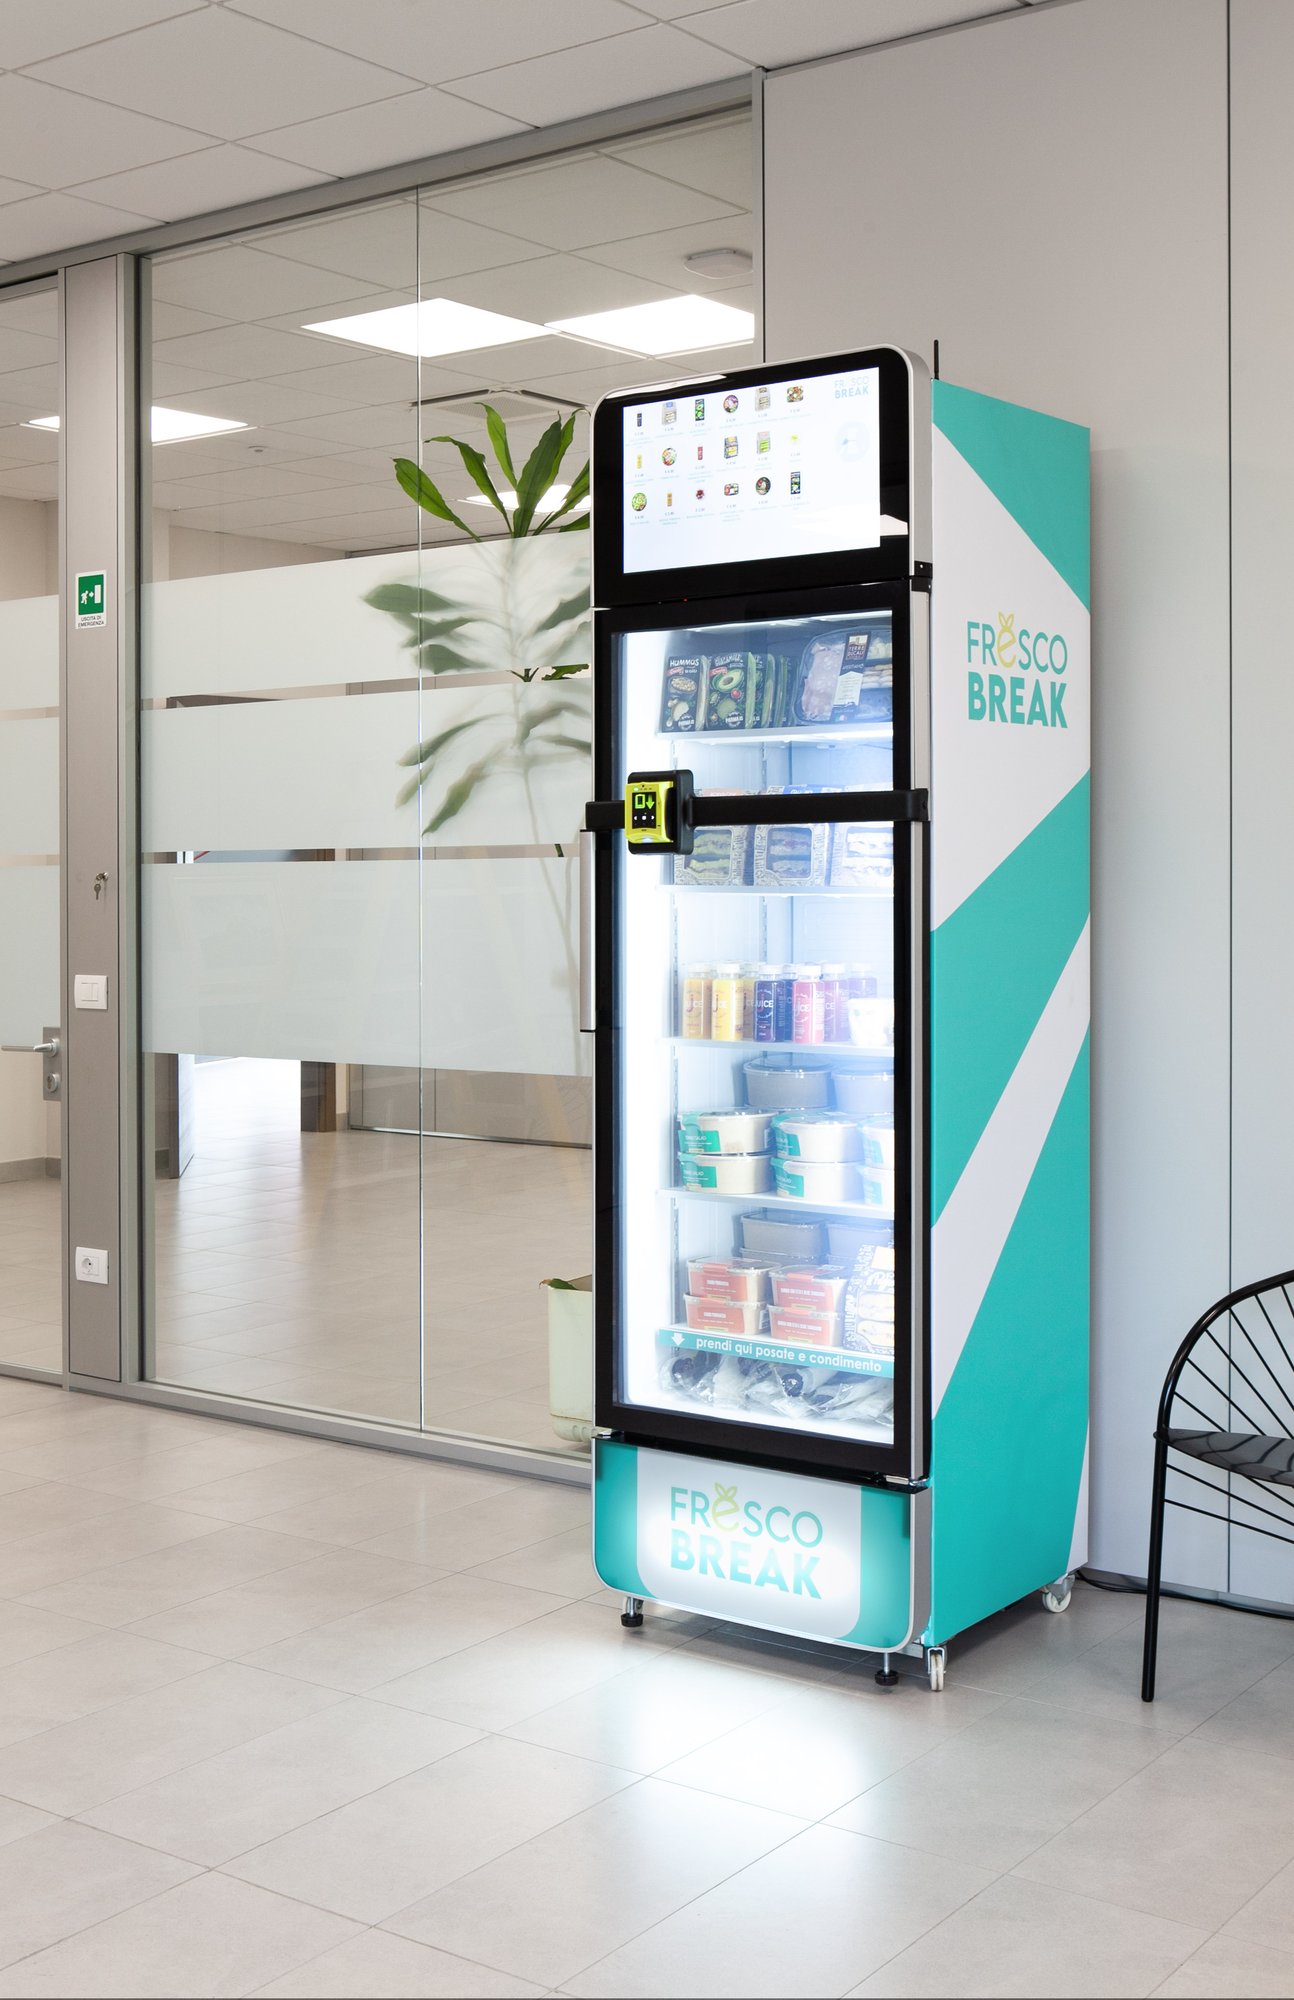 Frescobreak's smart vending machine at a workplace.